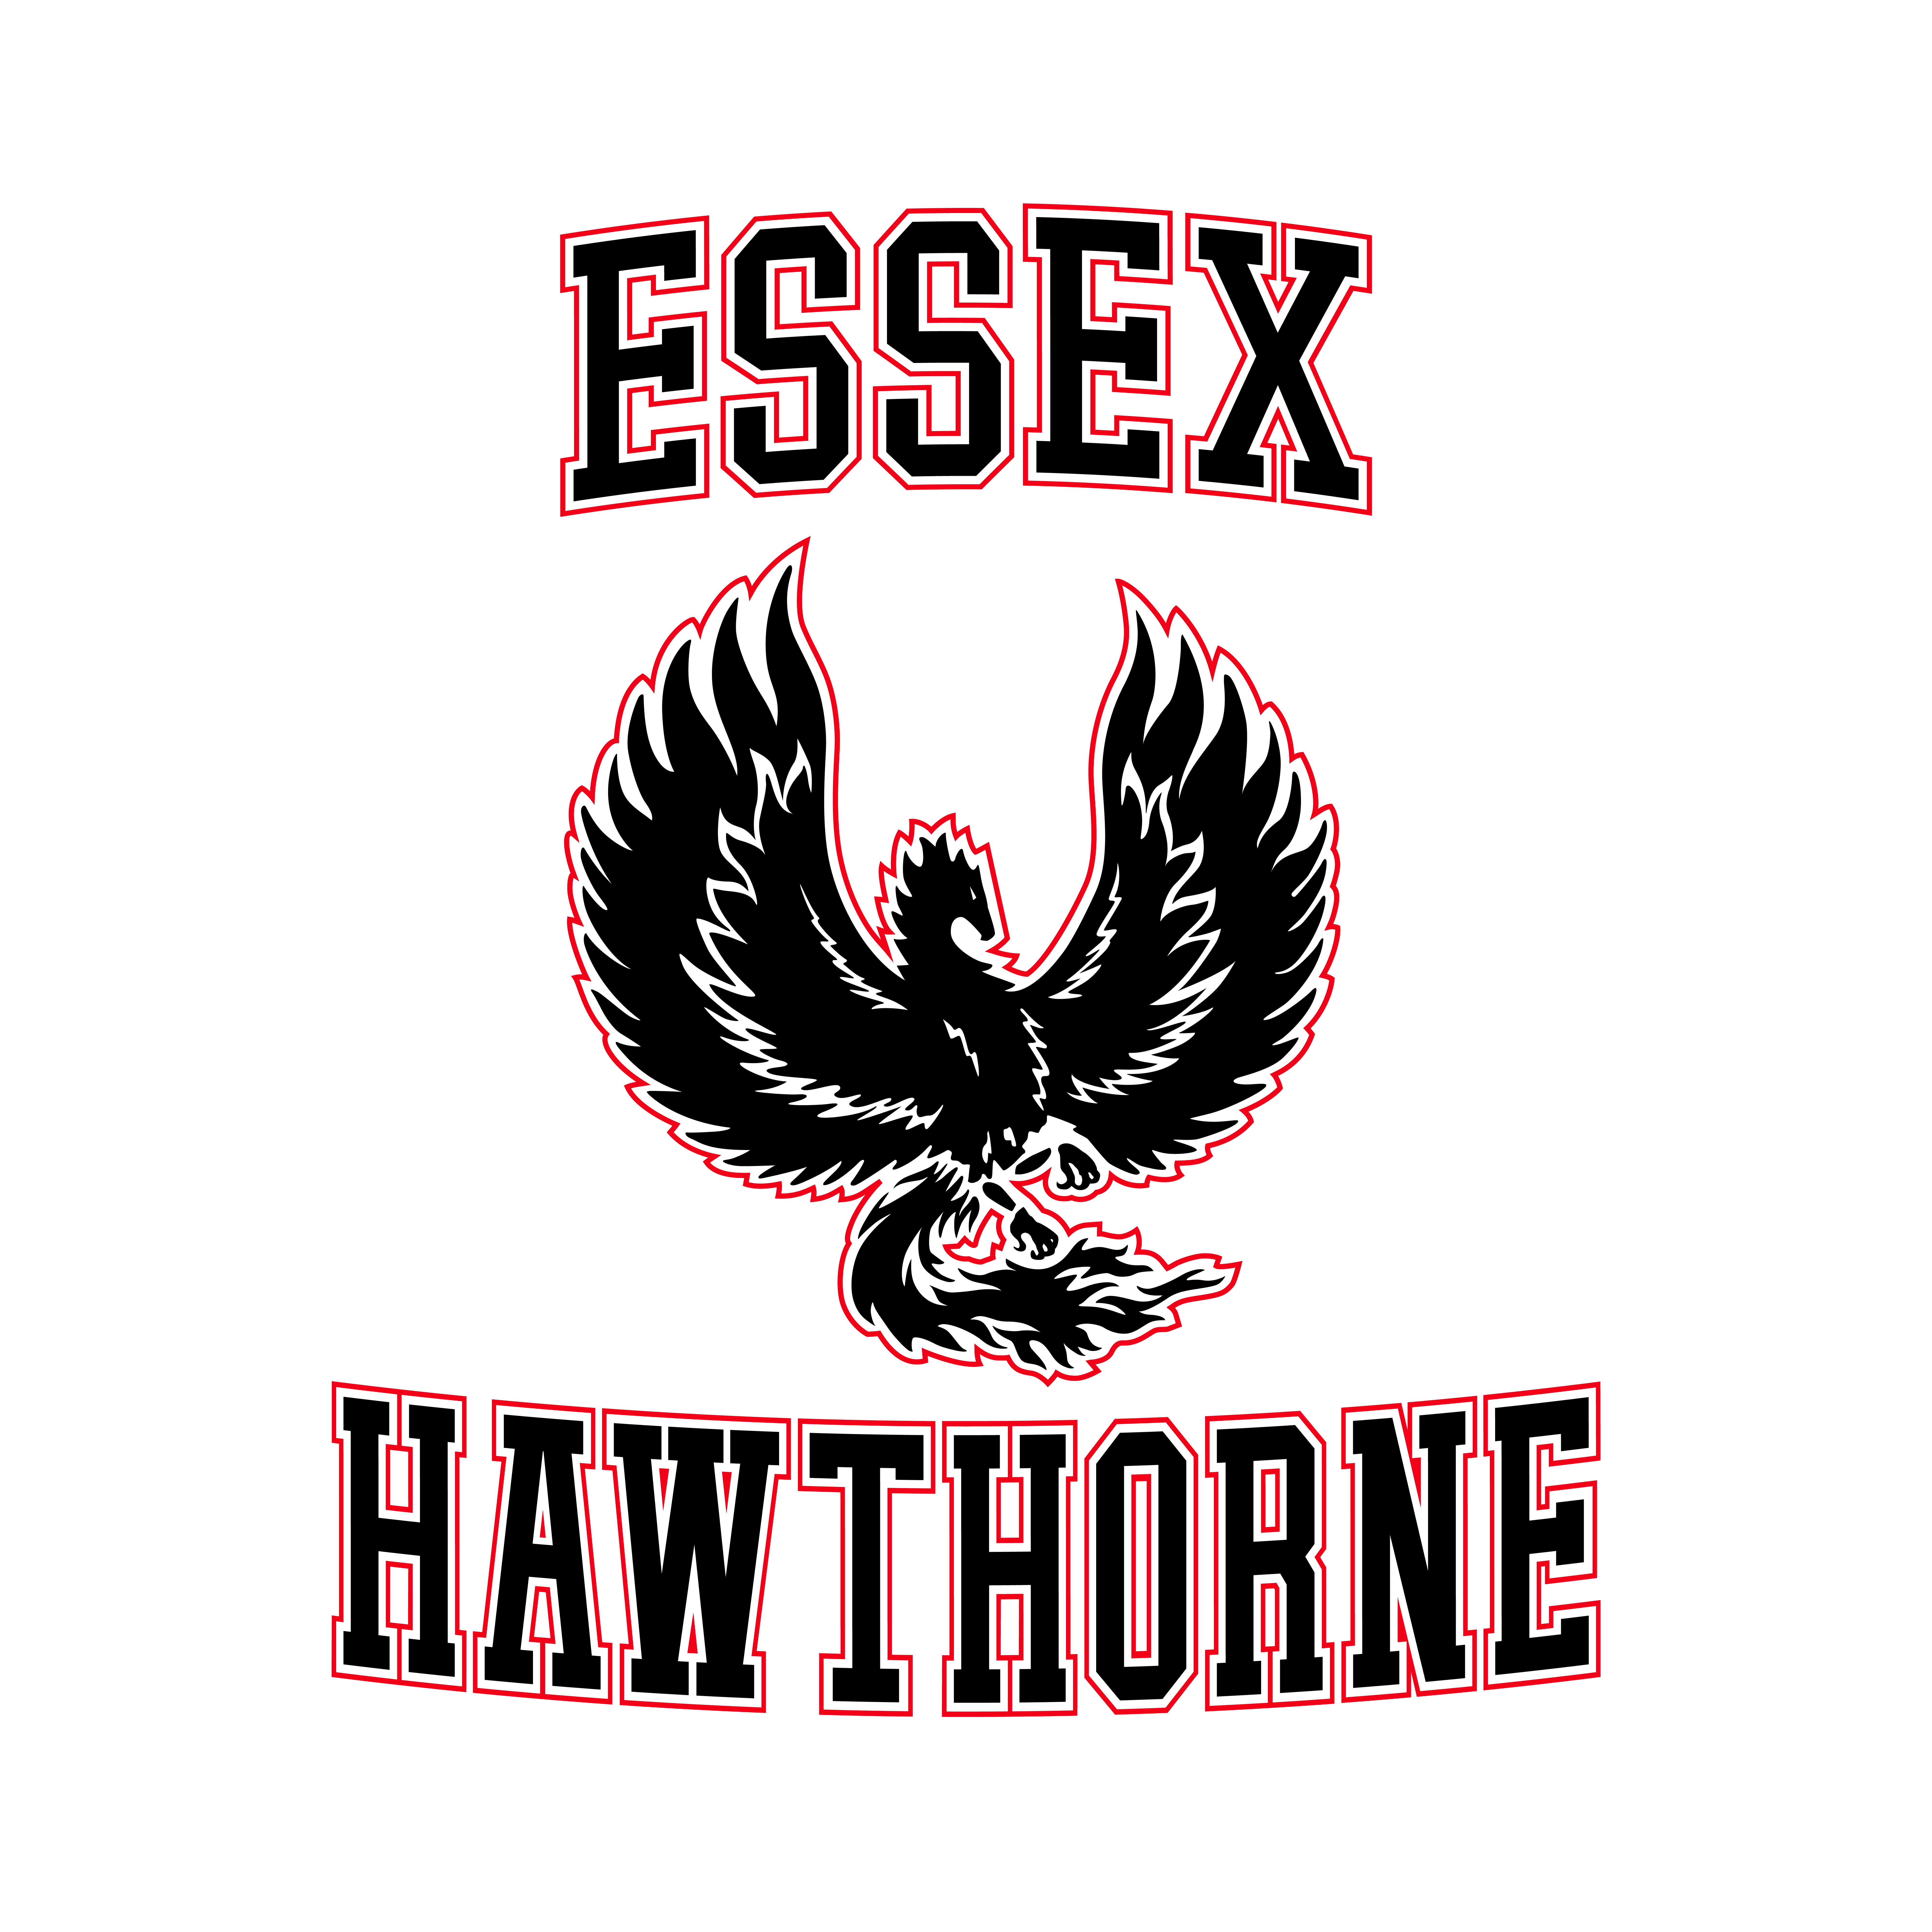 Essex Hawthorne